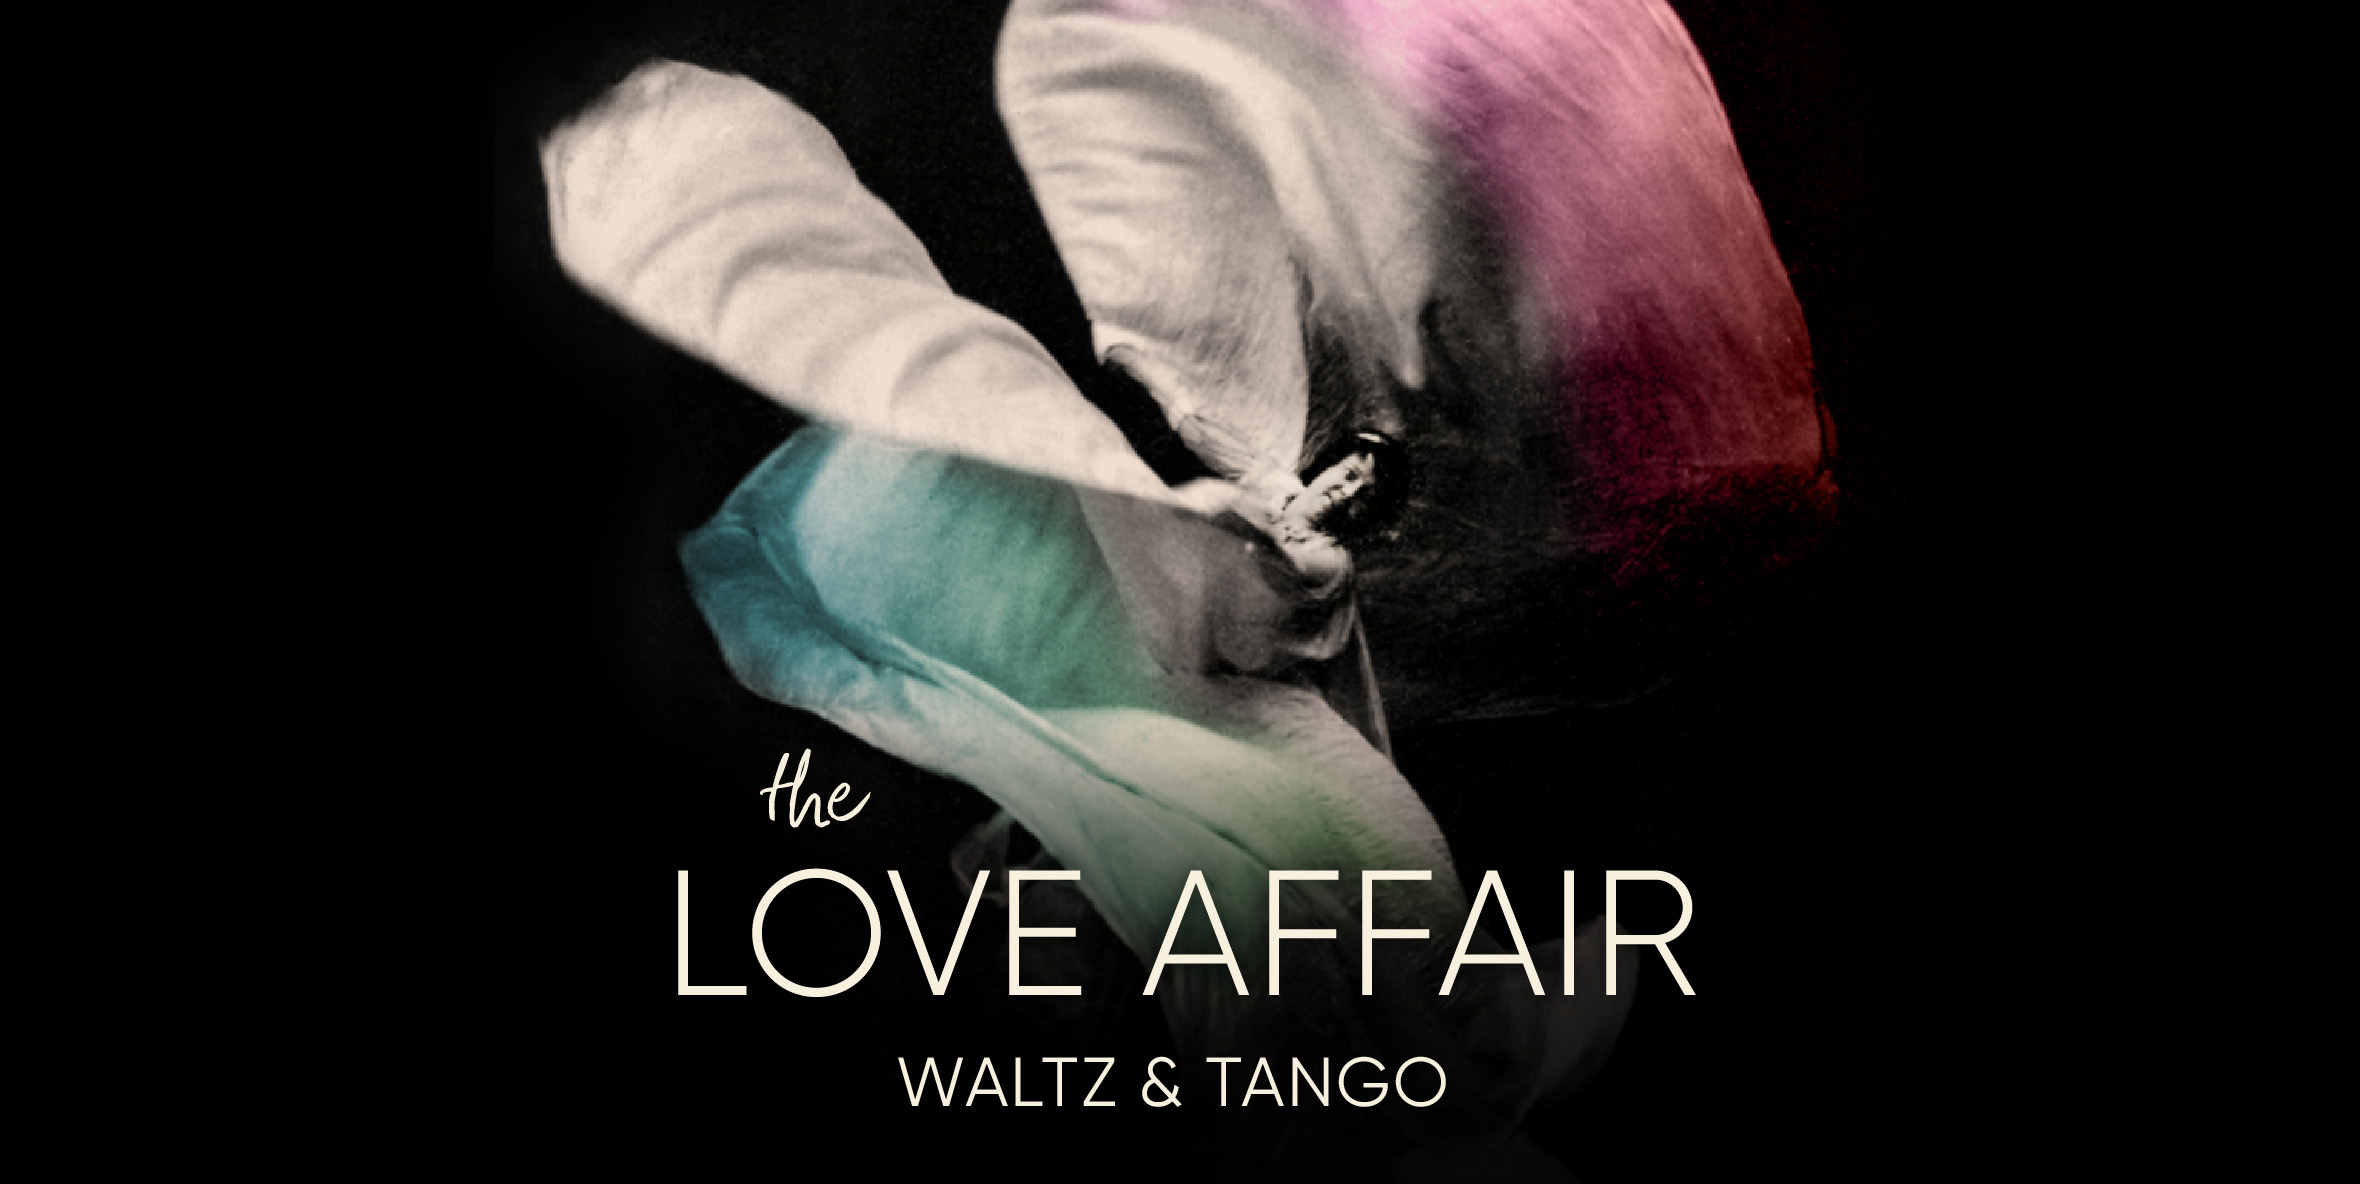 The Love Affair: Waltz & Tango concert